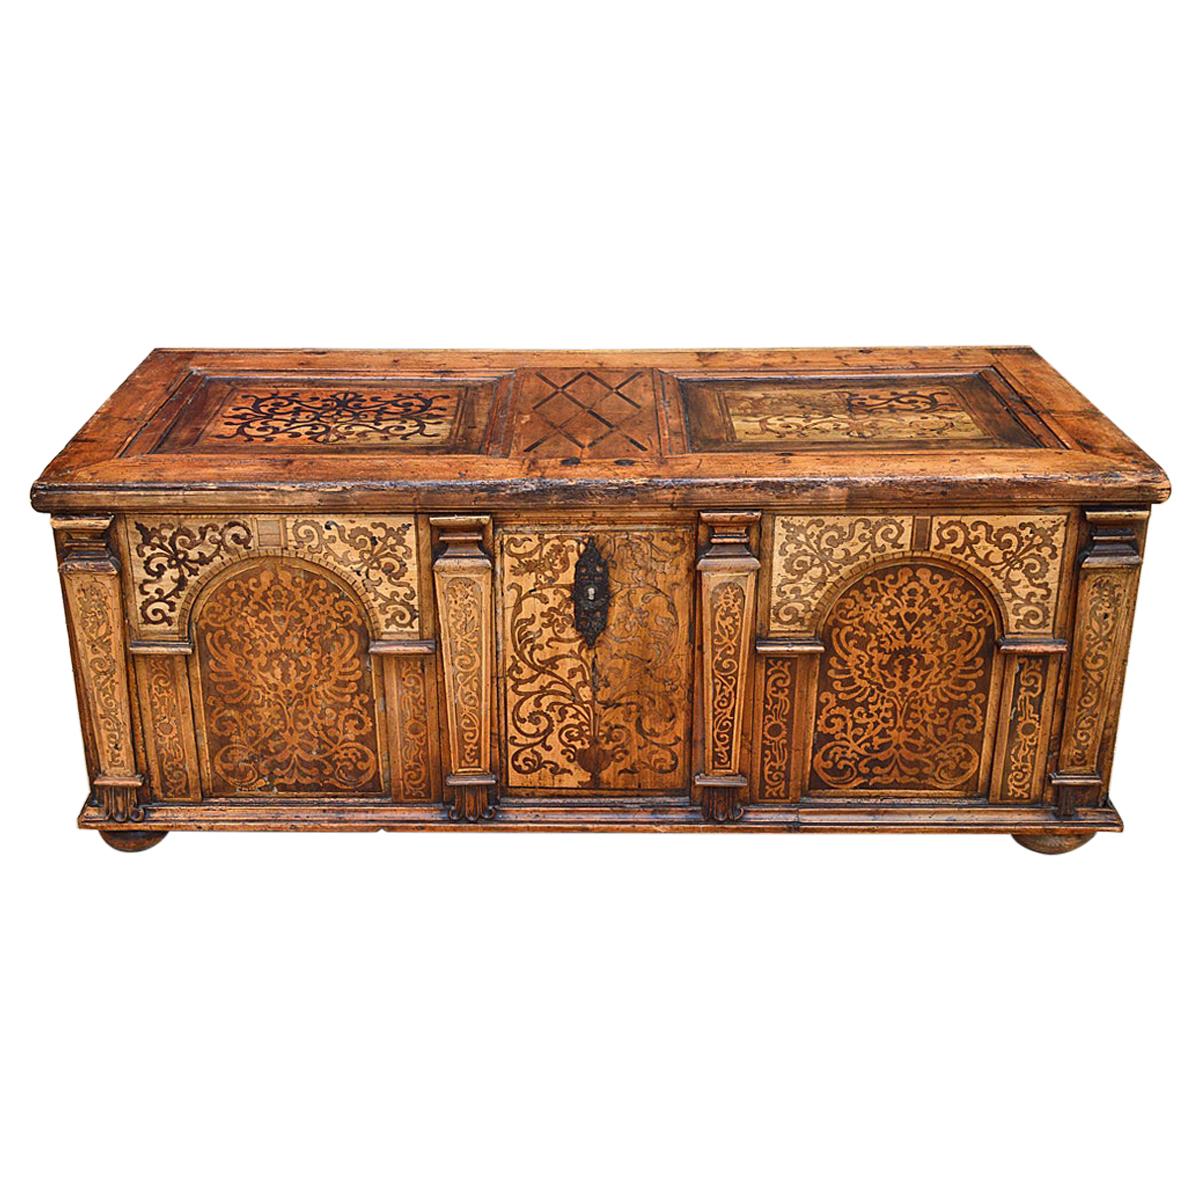 Antique Baroque Fruitwood Inlaid Desk / Cassone Chest, Mid-17th Century For Sale